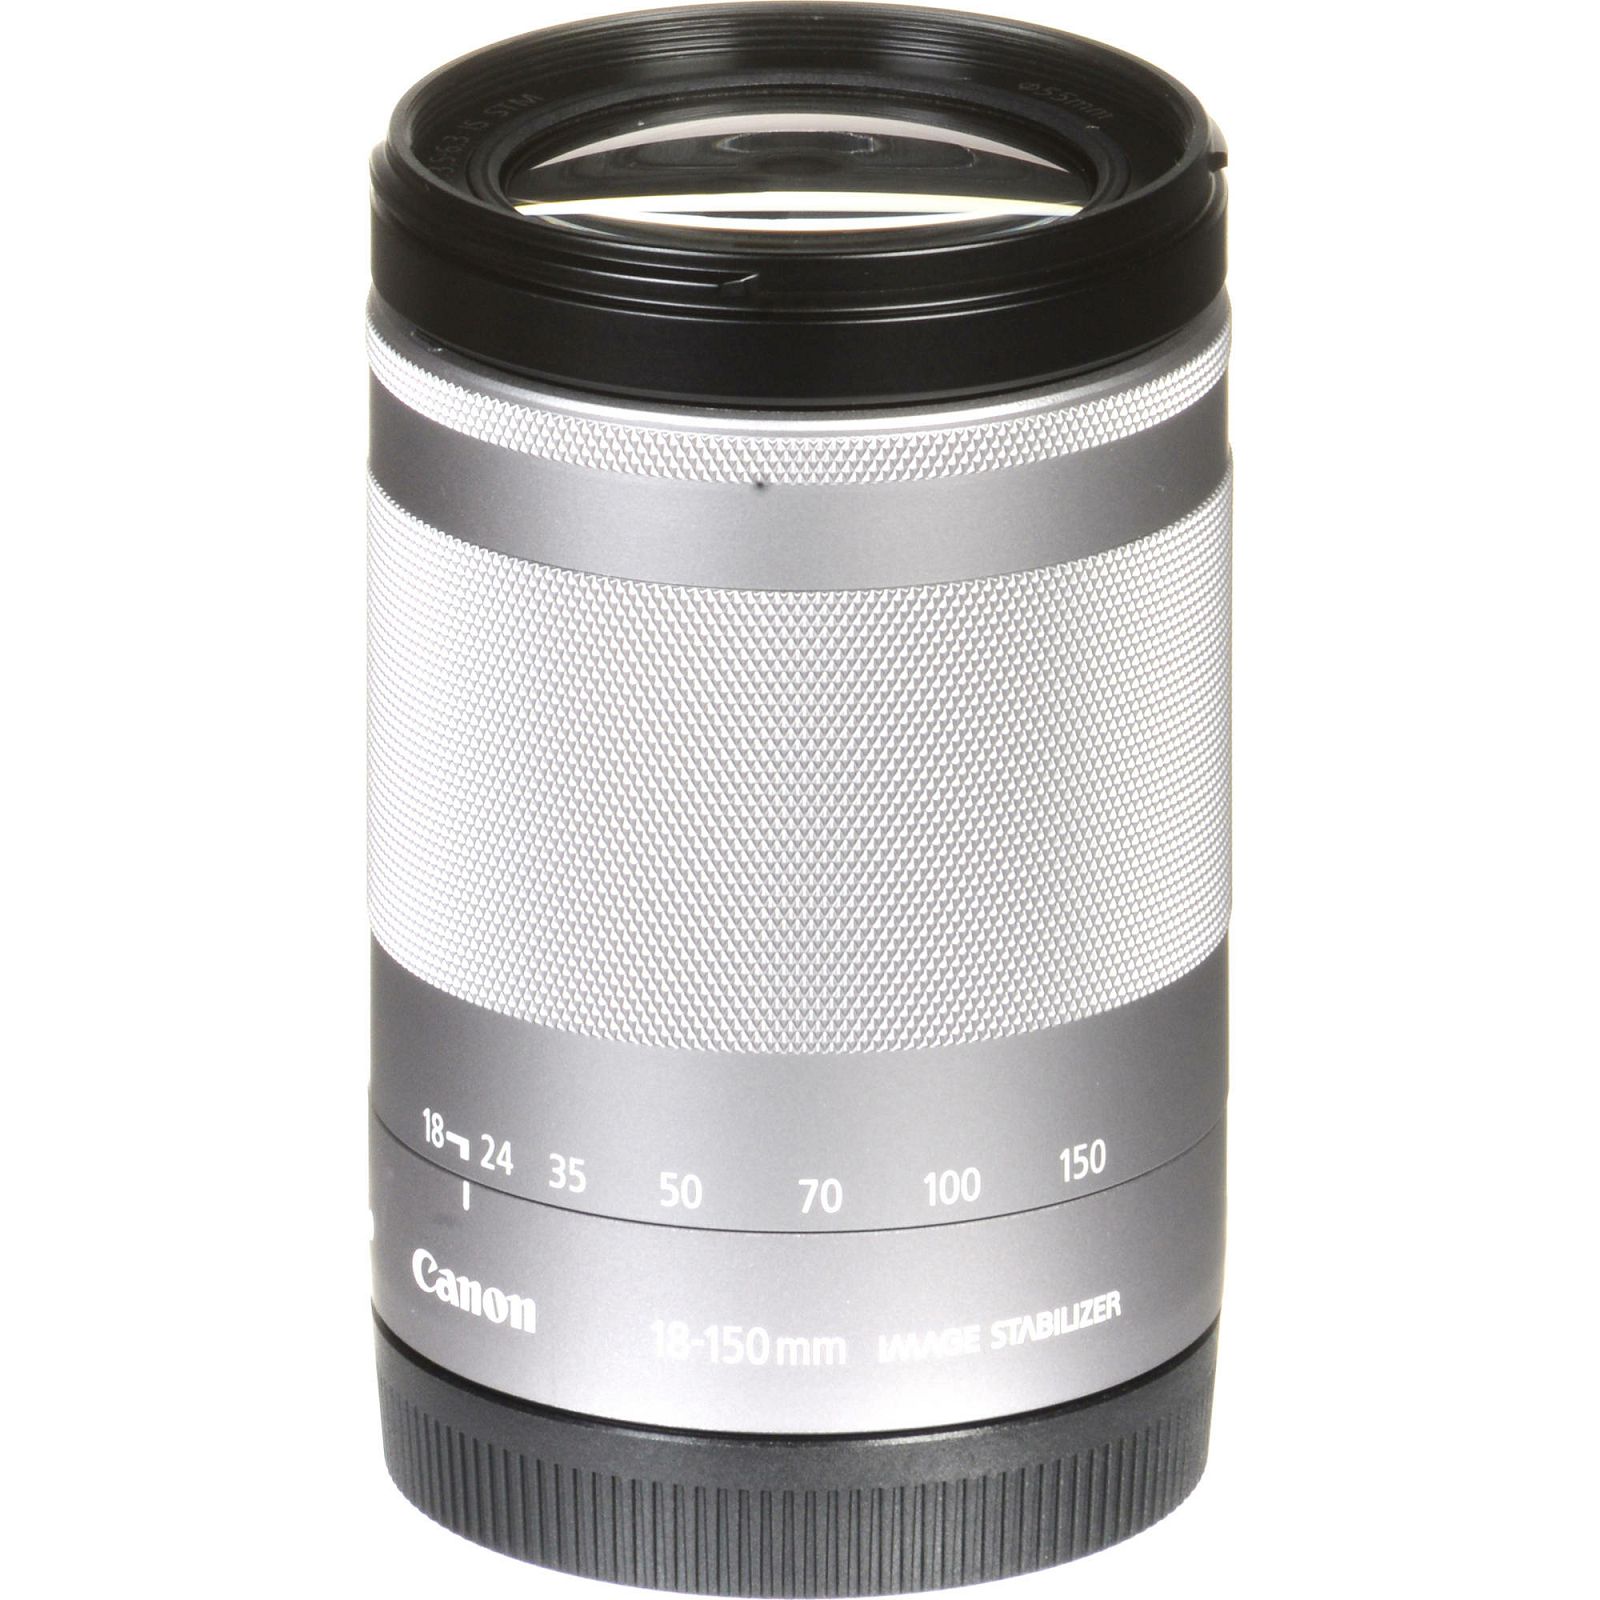 Canon EF-M 18-150mm f/3.5-6.3 IS STM Silver srebreni allround standardni objektiv za fotoaparat 18-150 F 3.5-6.3 (1376C005AA)